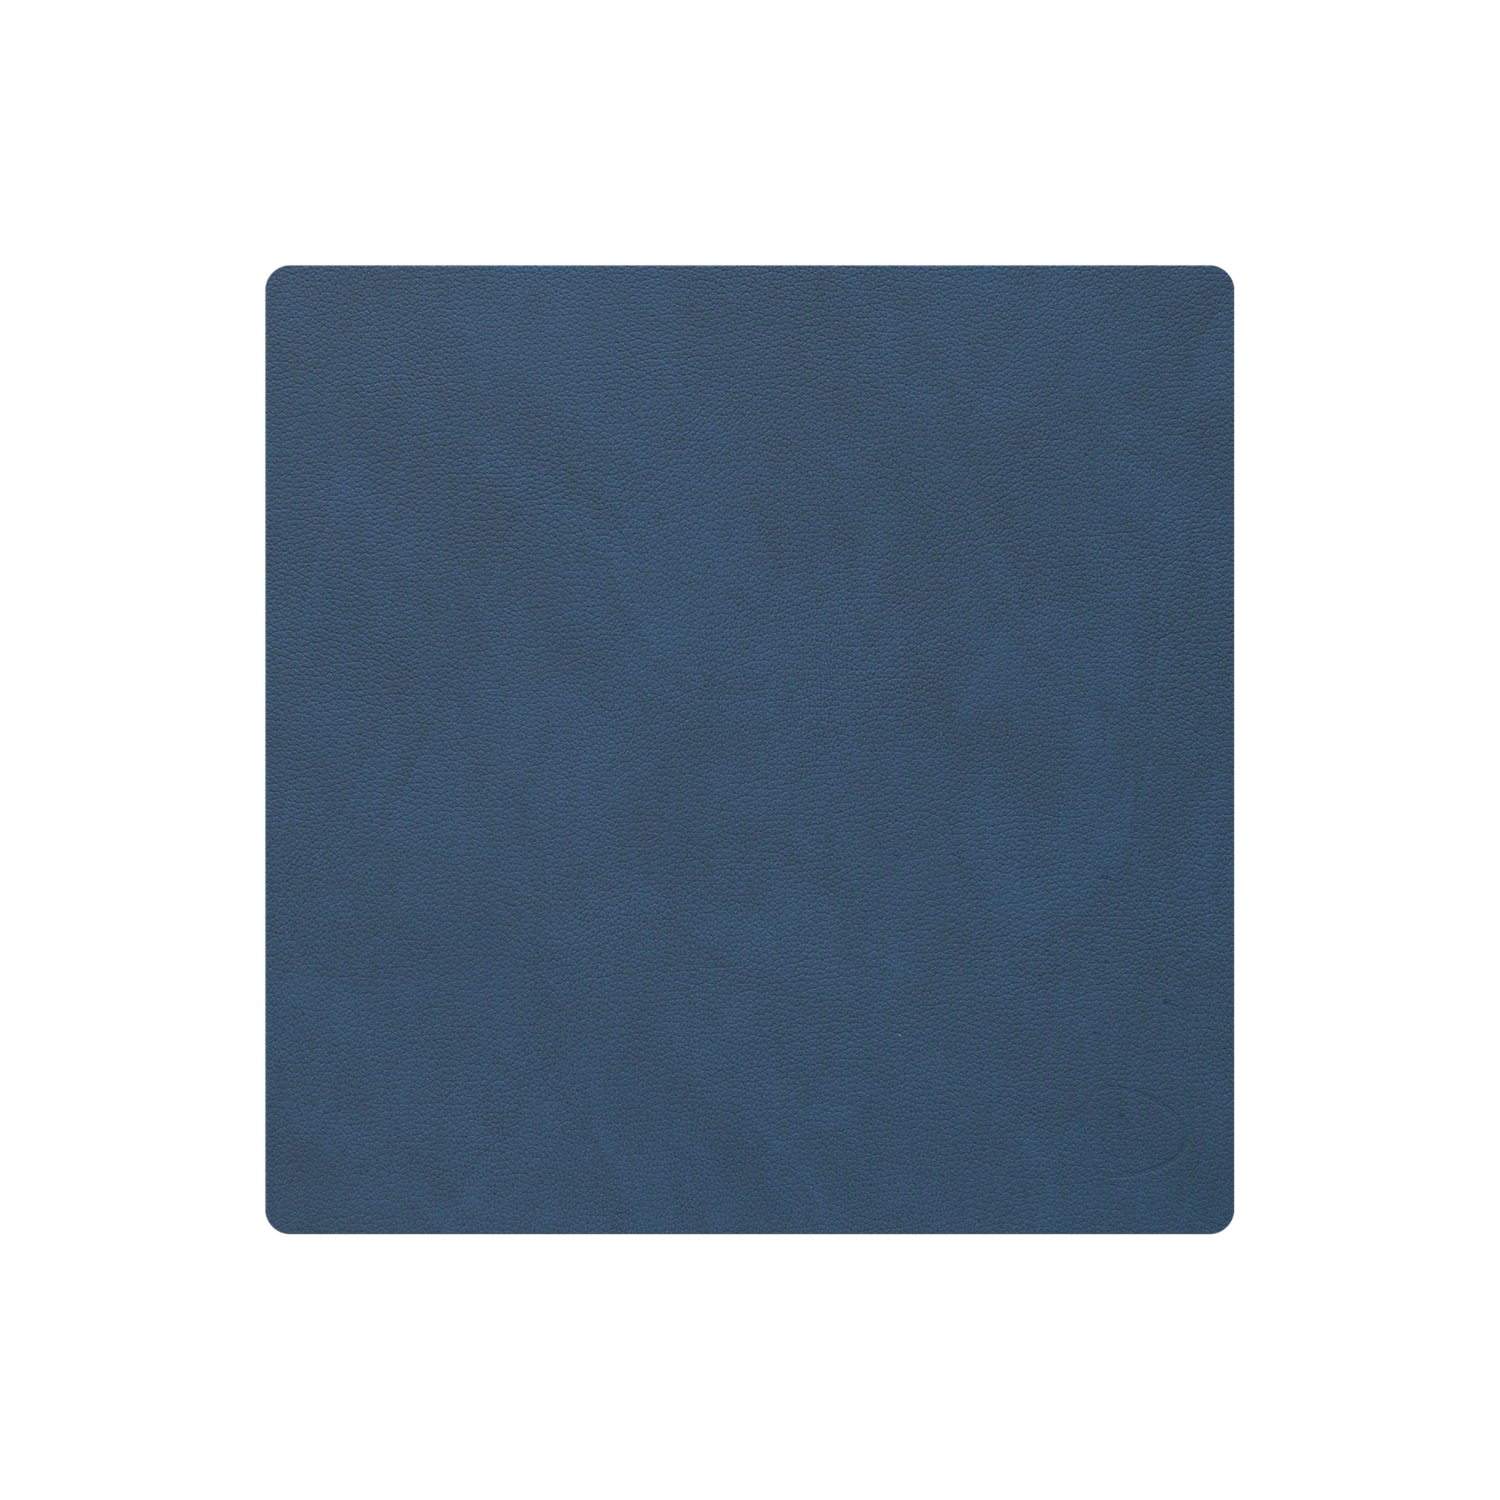 Lind DNA - Tischset Nupo Square midnight blue 28x28 cm